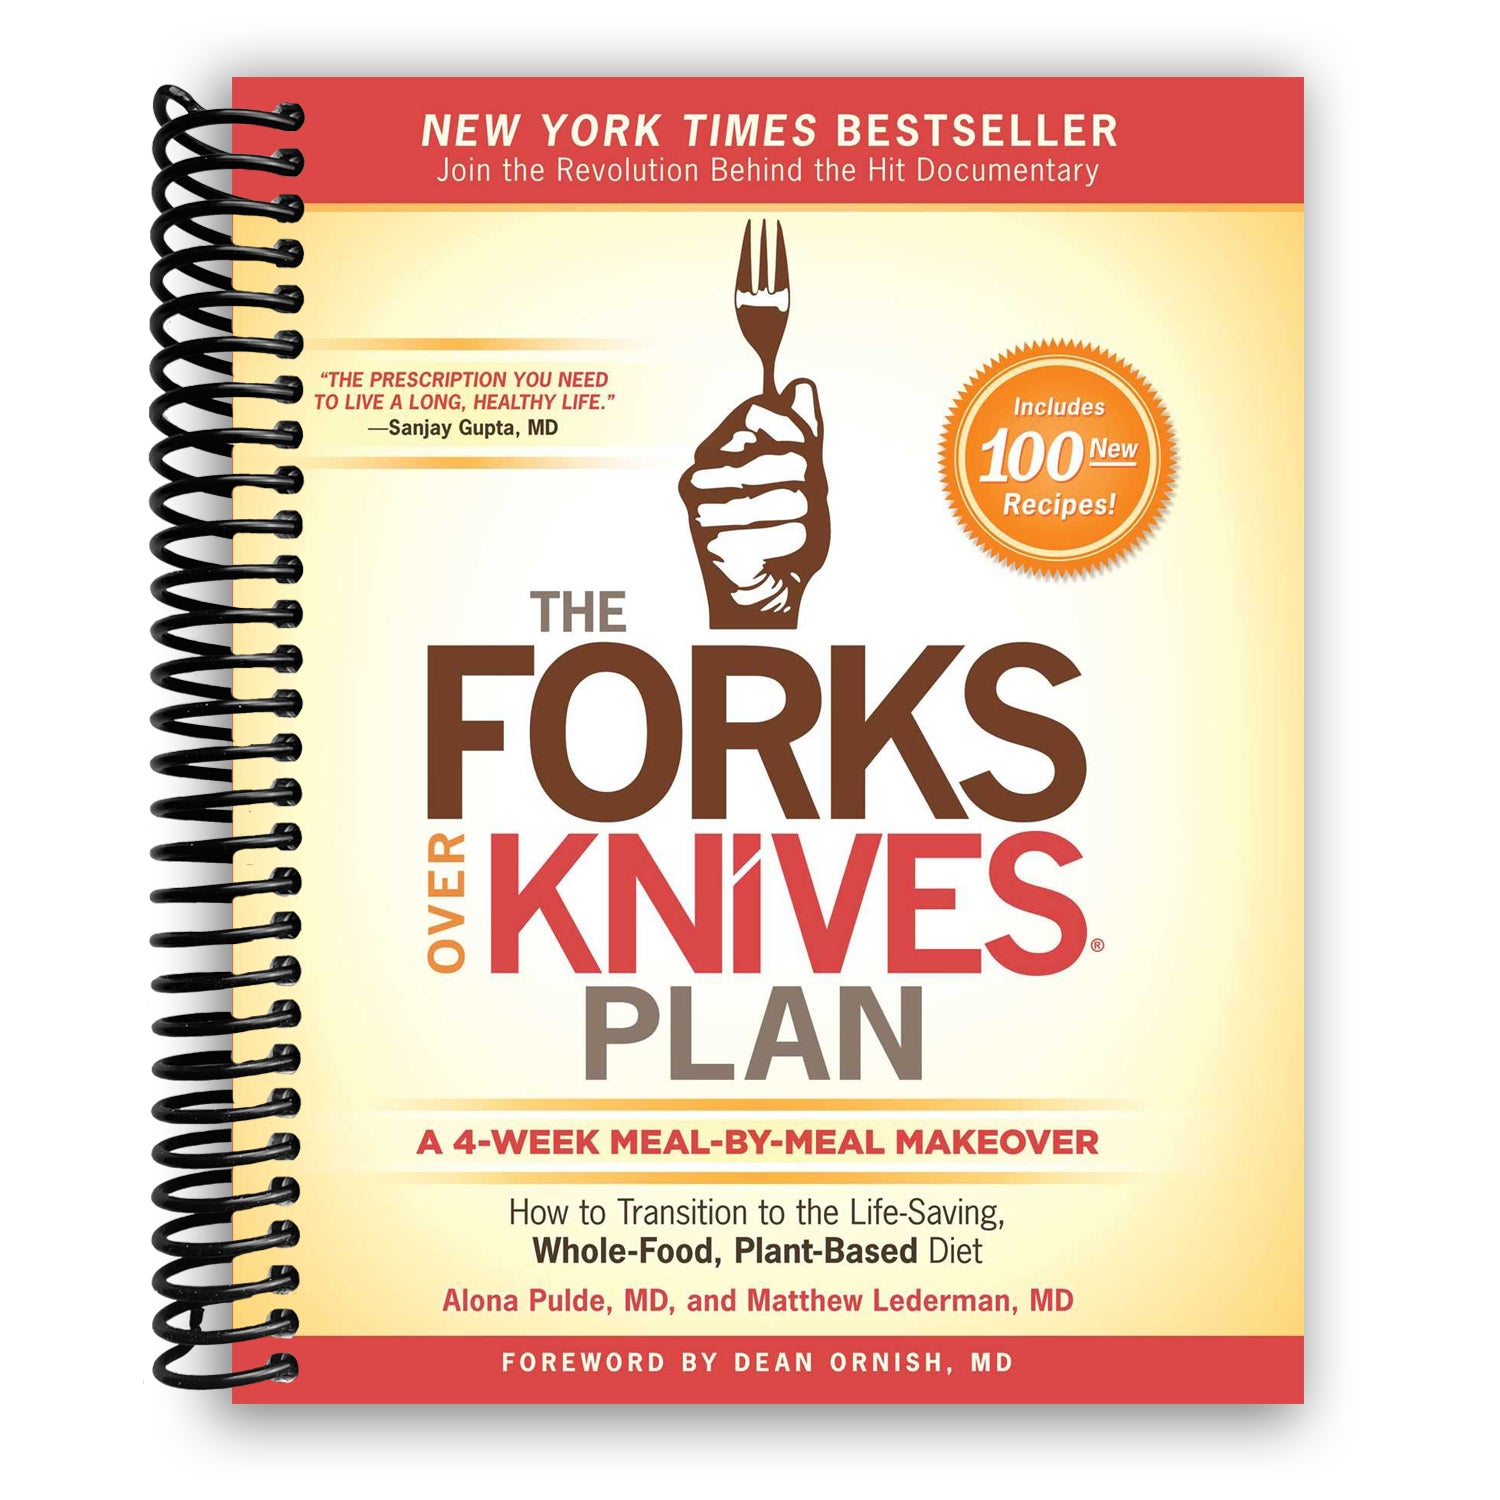 6 Benefits of Meal Prepping - Forks Over Knives